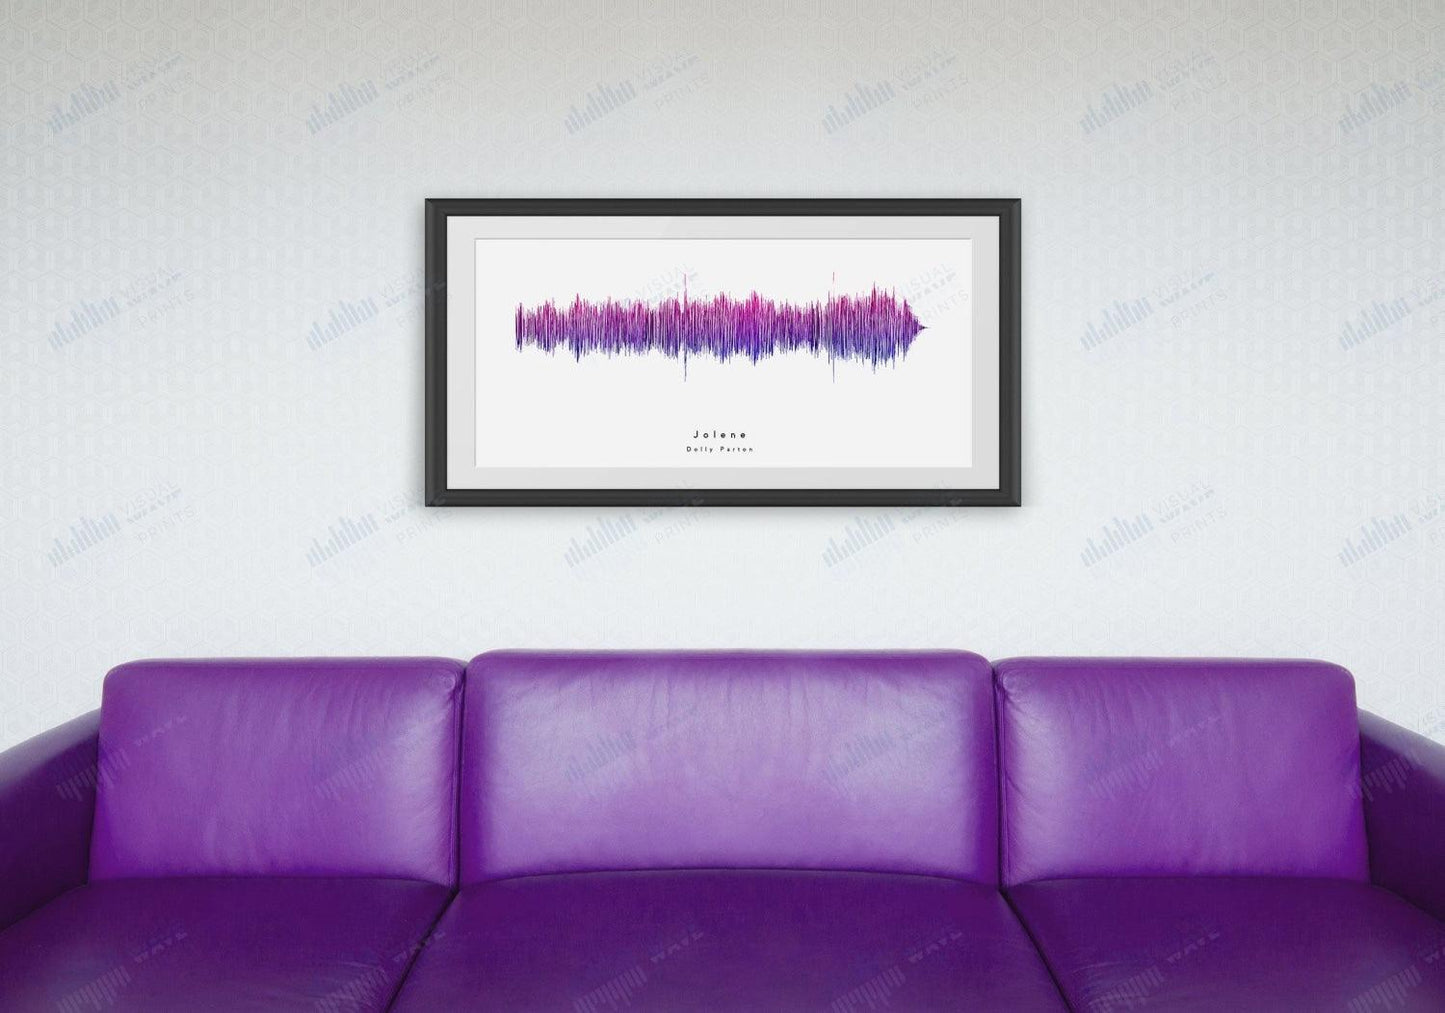 Jolene by Dolly Parton - Visual Wave Prints